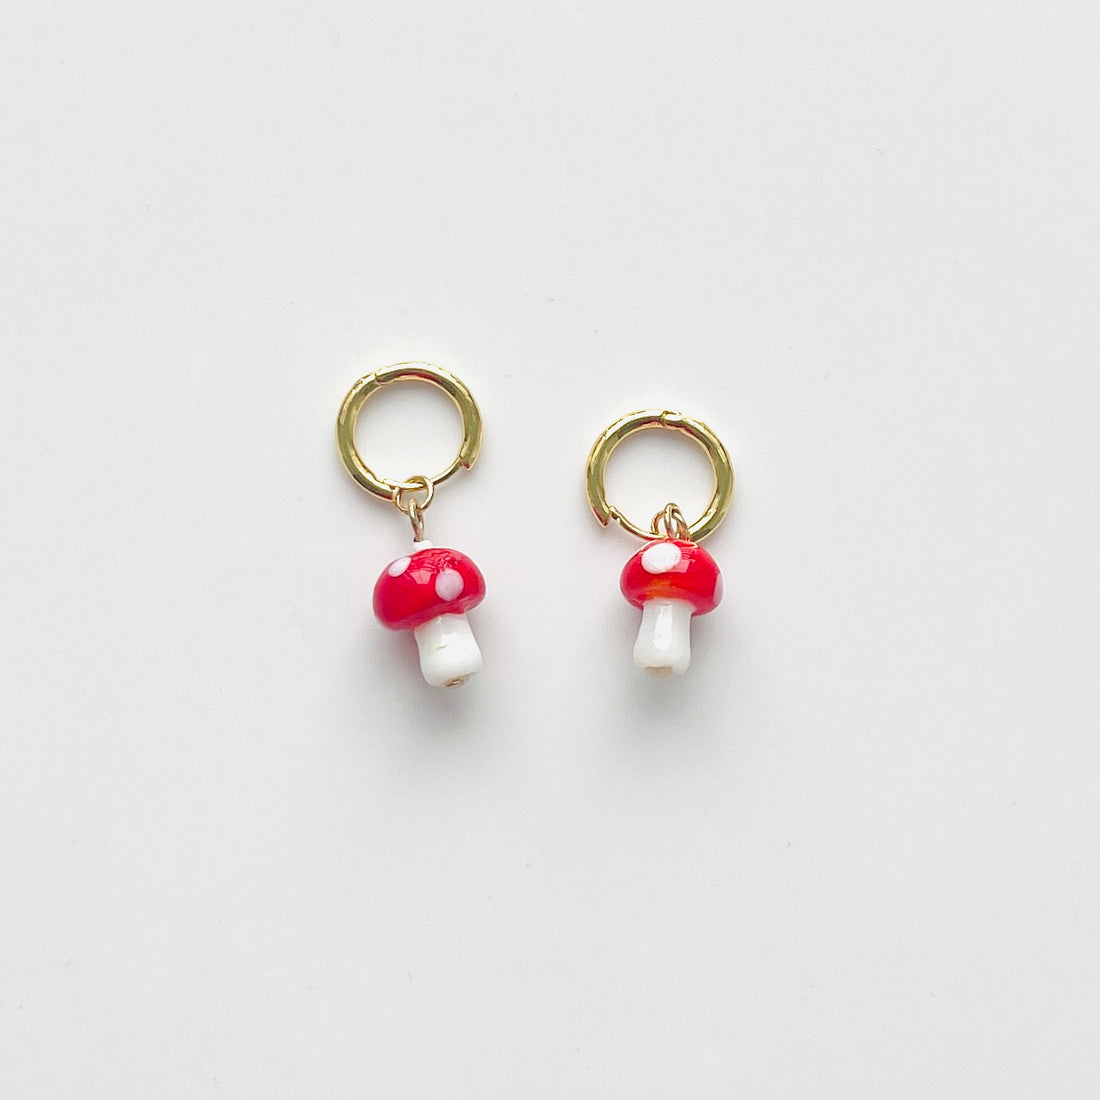 Gold plated hoop earrings with mushroom charms